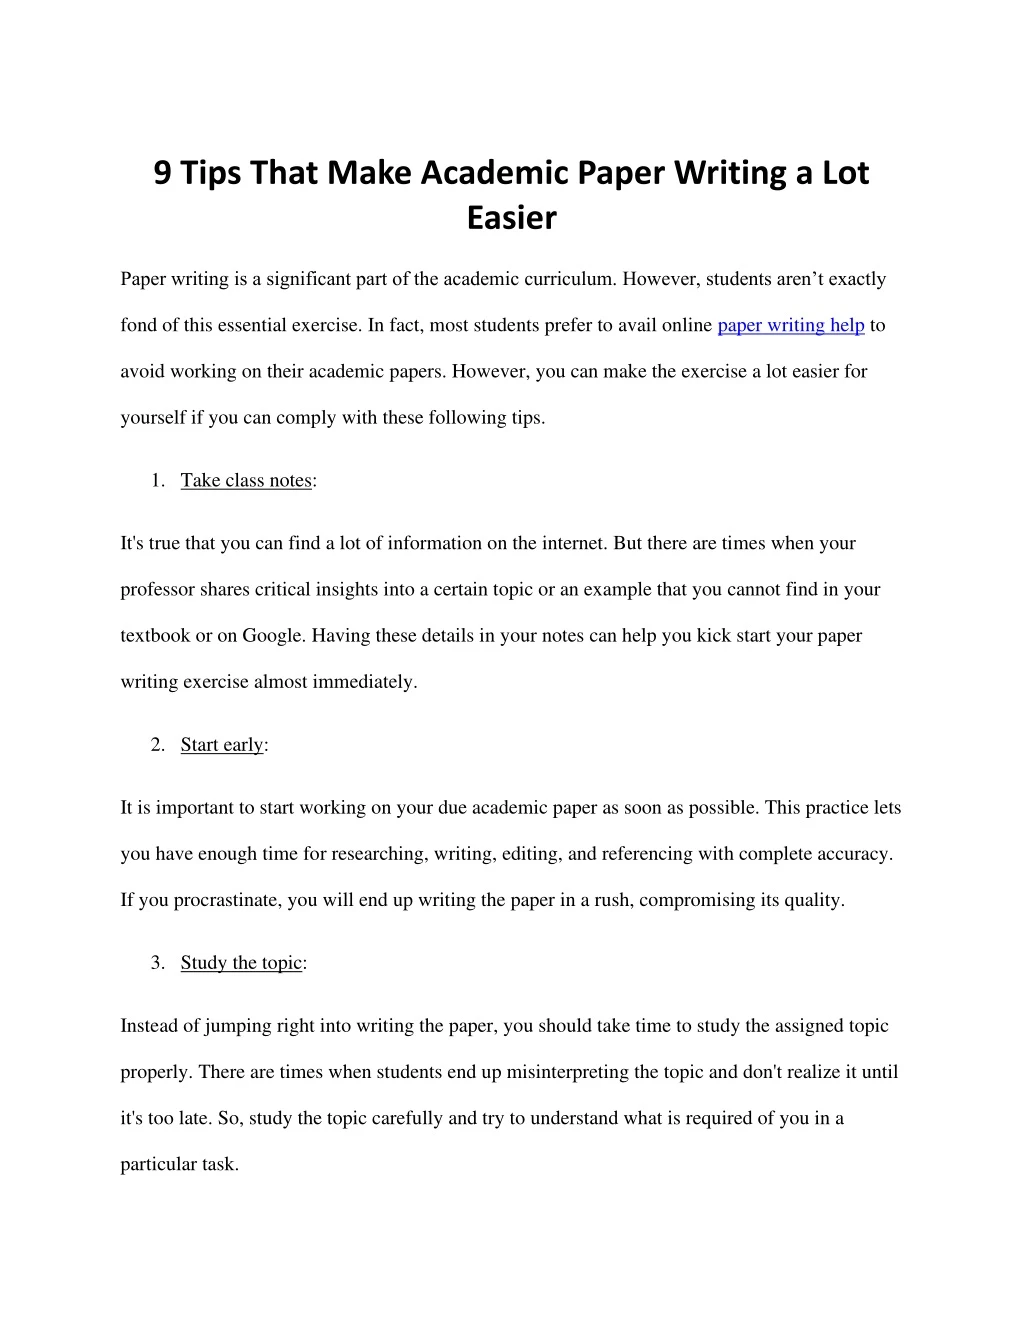 9 tips that make academic paper writing